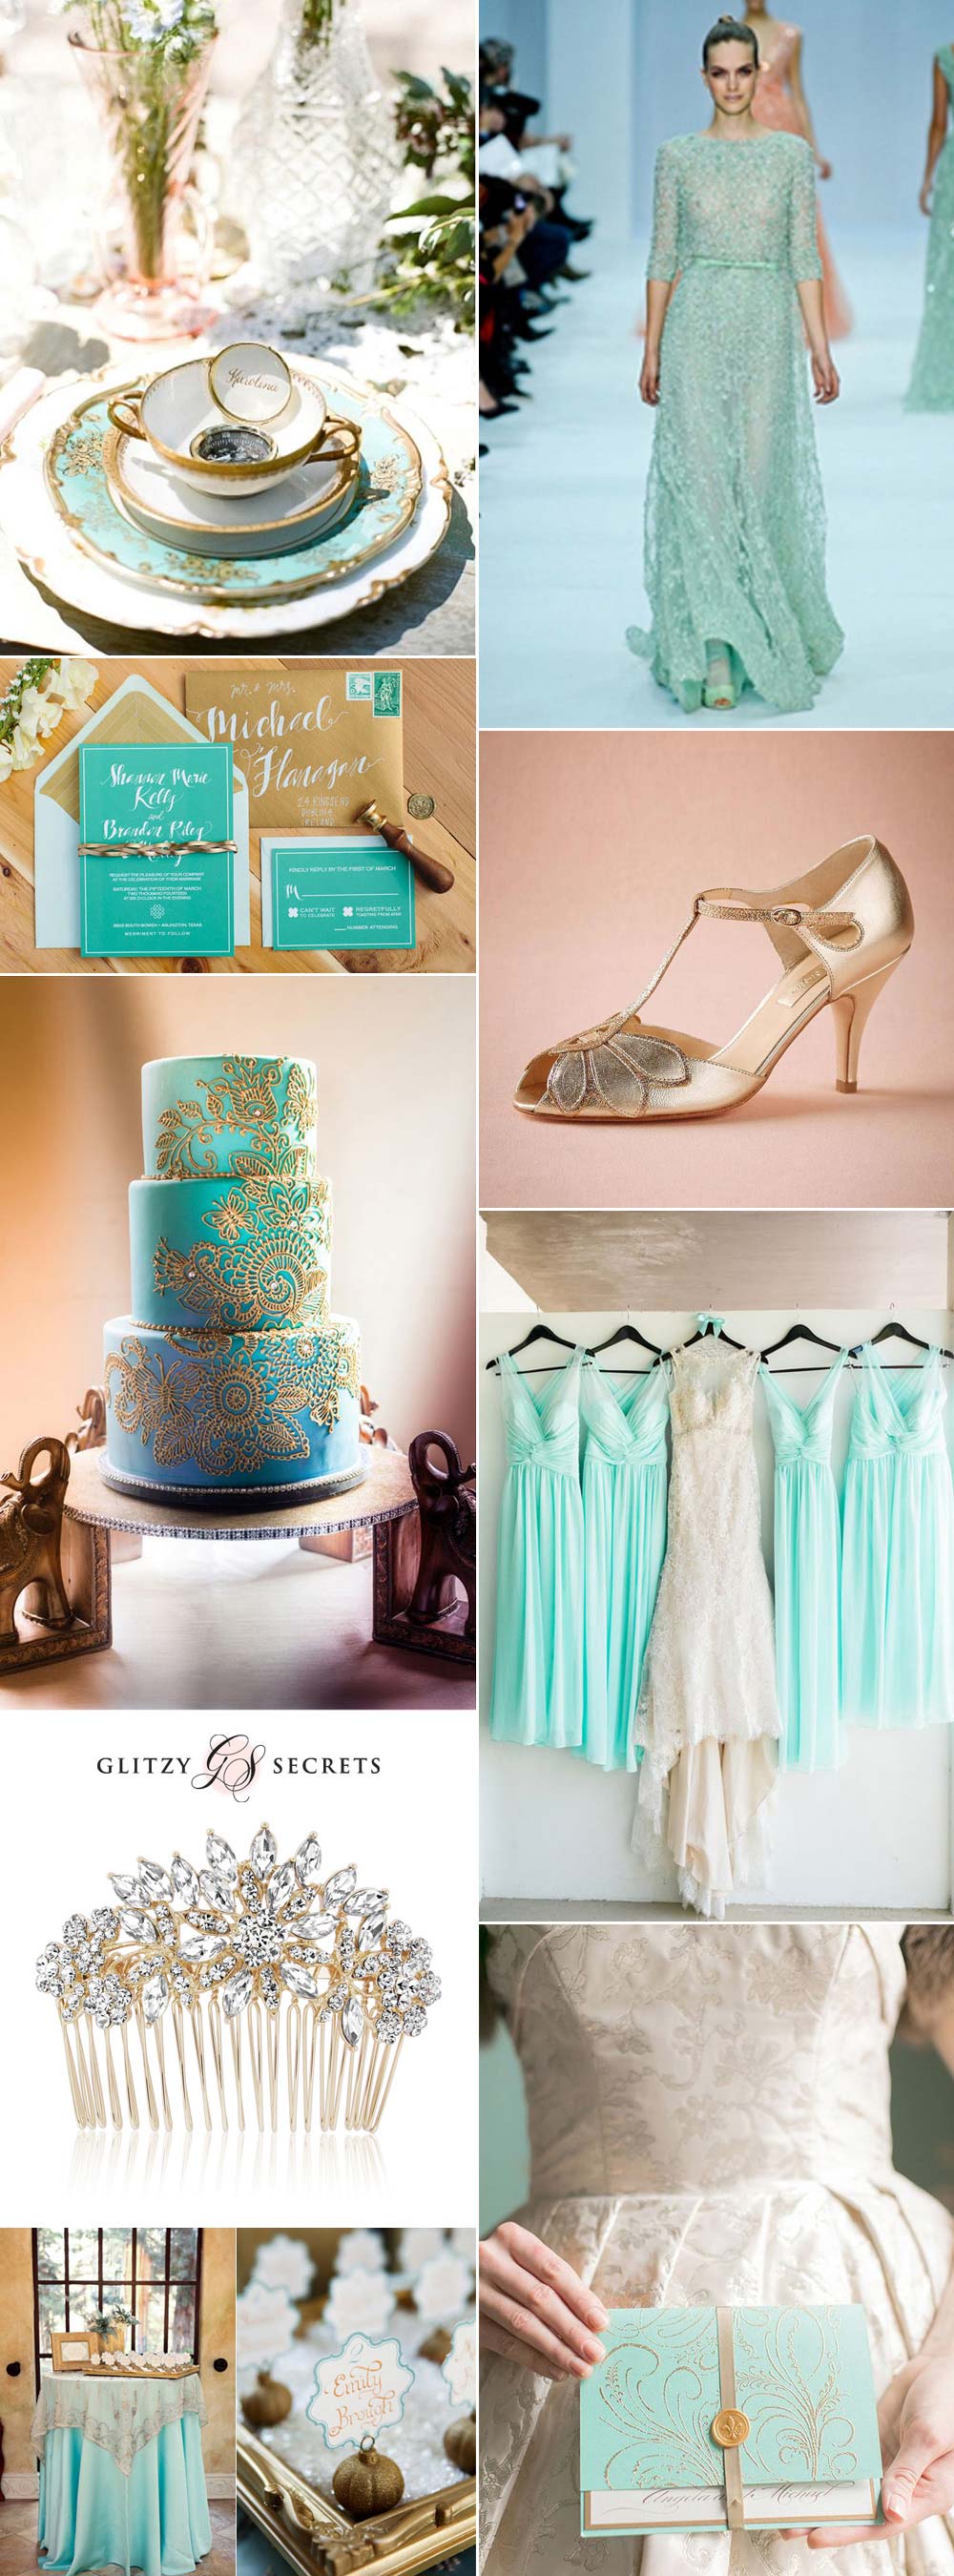 Aqua and gold theme wedding inspiration ideas